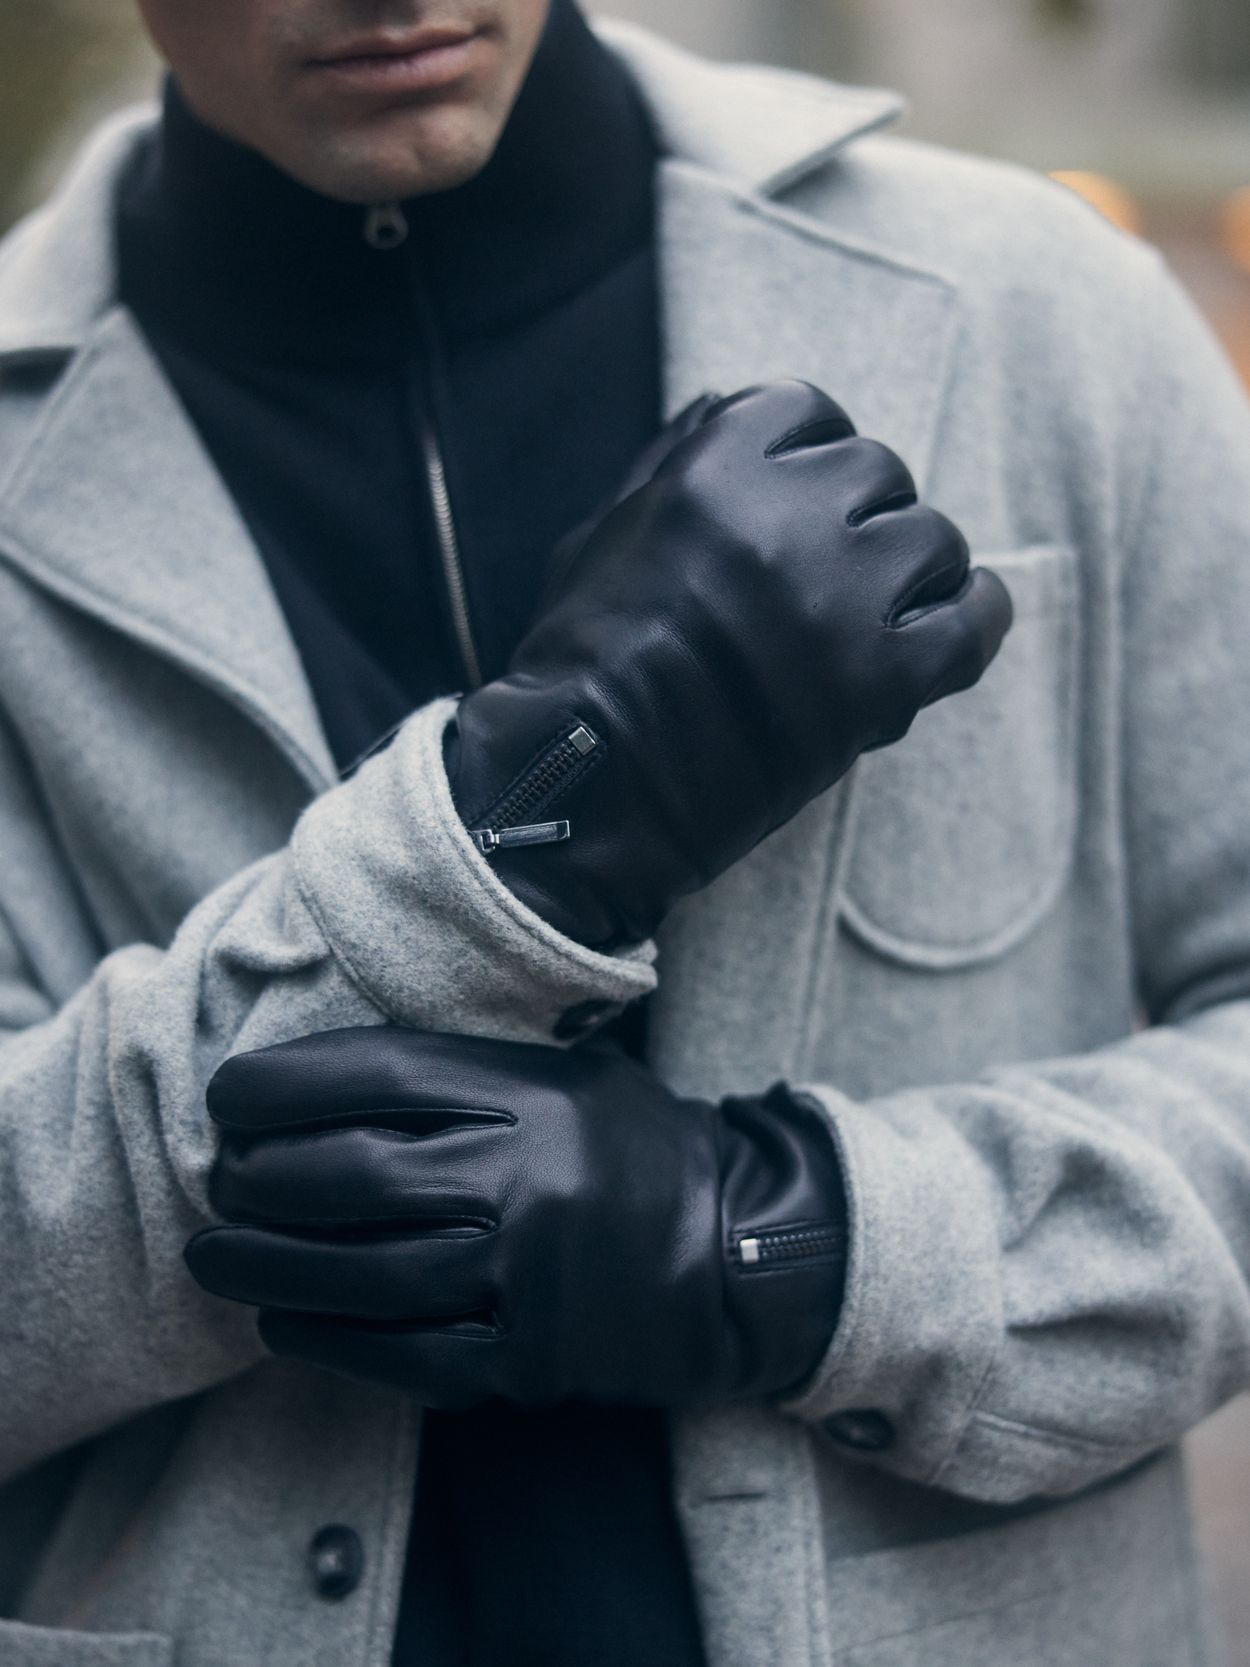 Black Leather Gloves Arosa